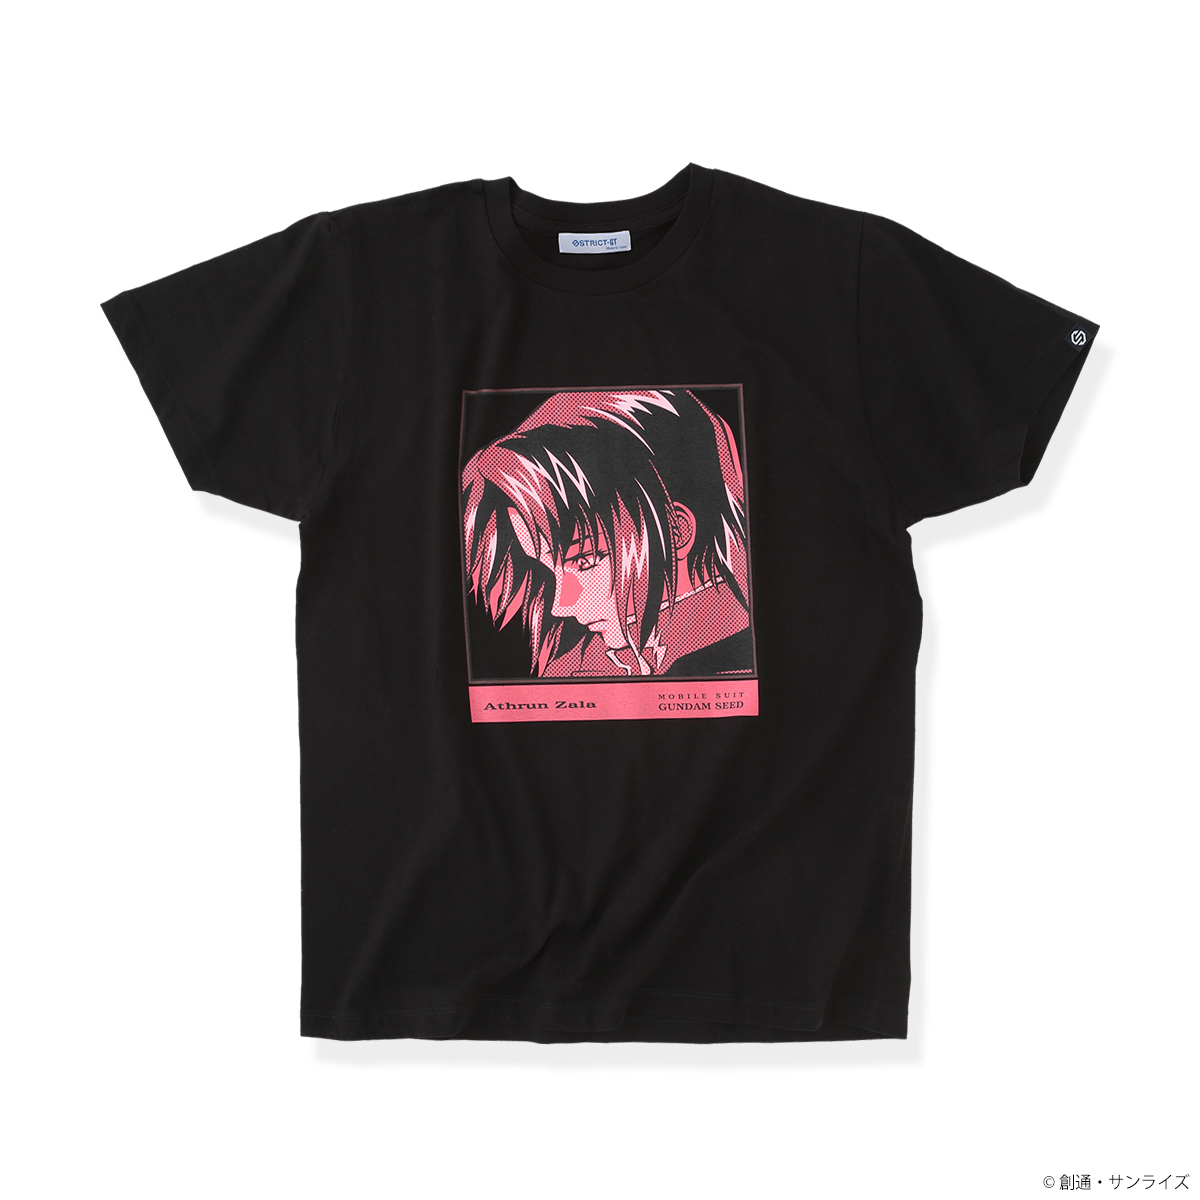 STRICT-G『機動戦士ガンダムSEED』 POP ARTシリーズ Tシャツ